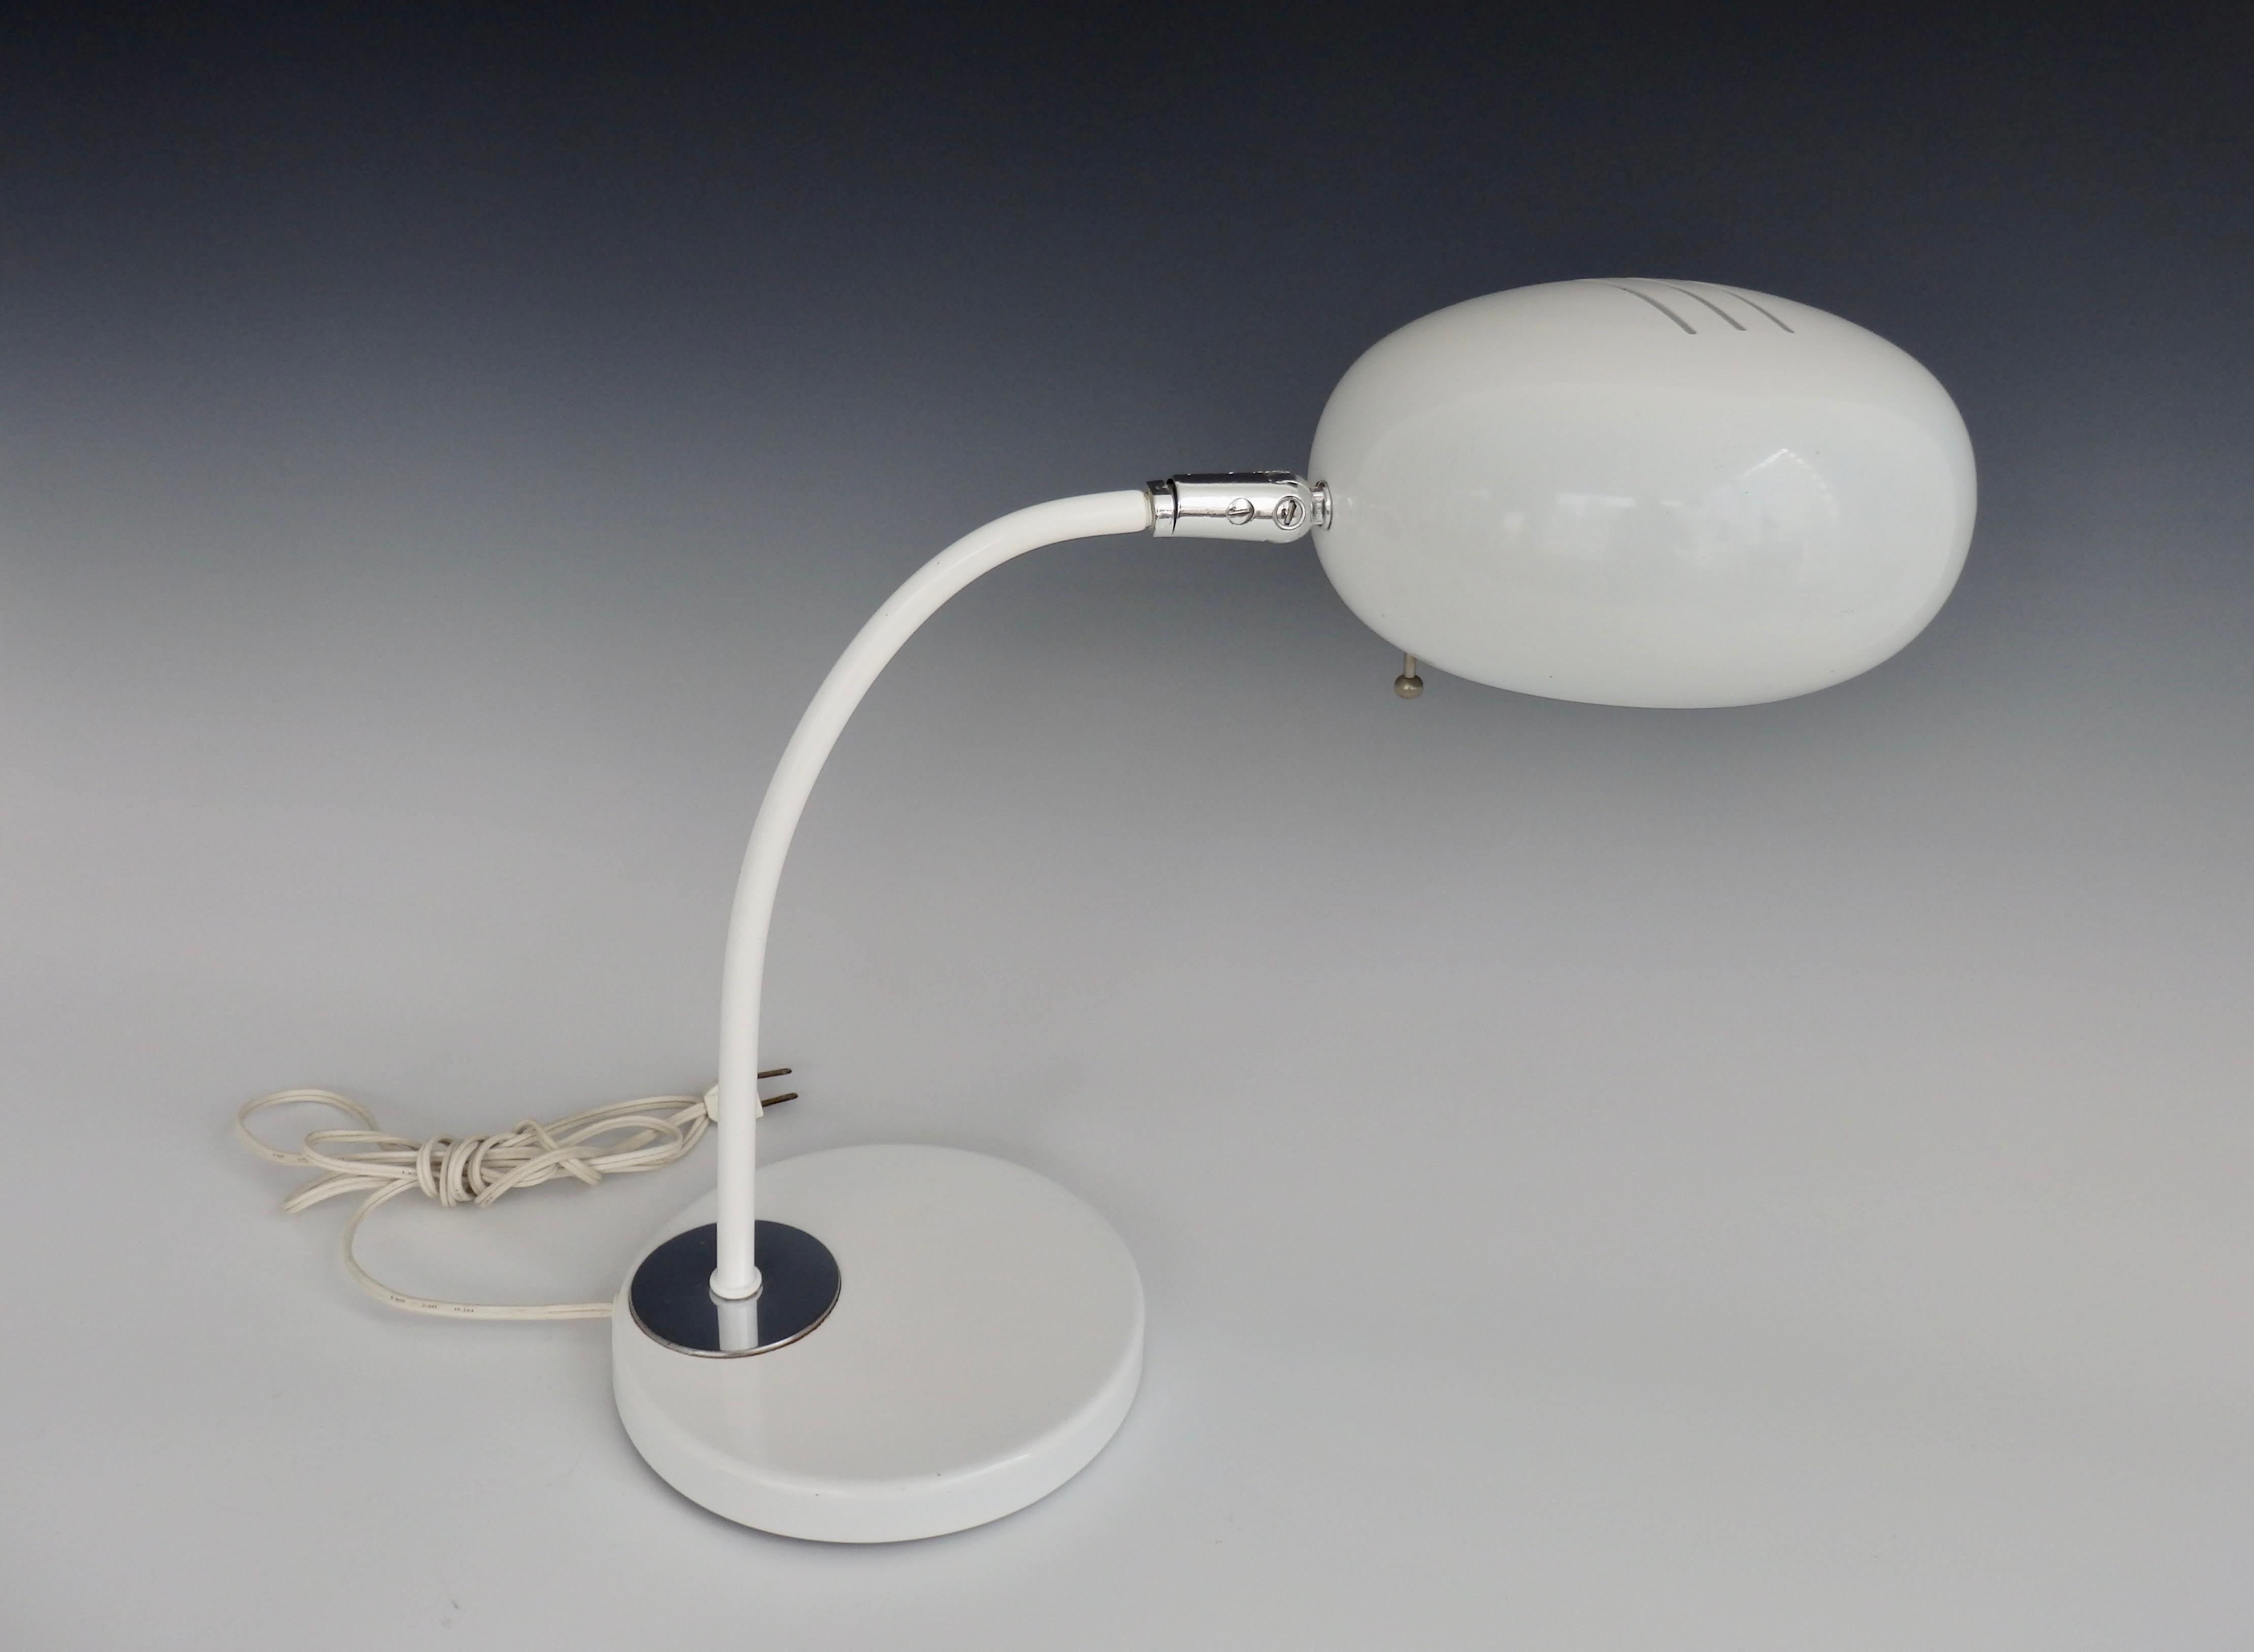 Mid-Century Modern gloss white round desk lamp.
Base is 7.24